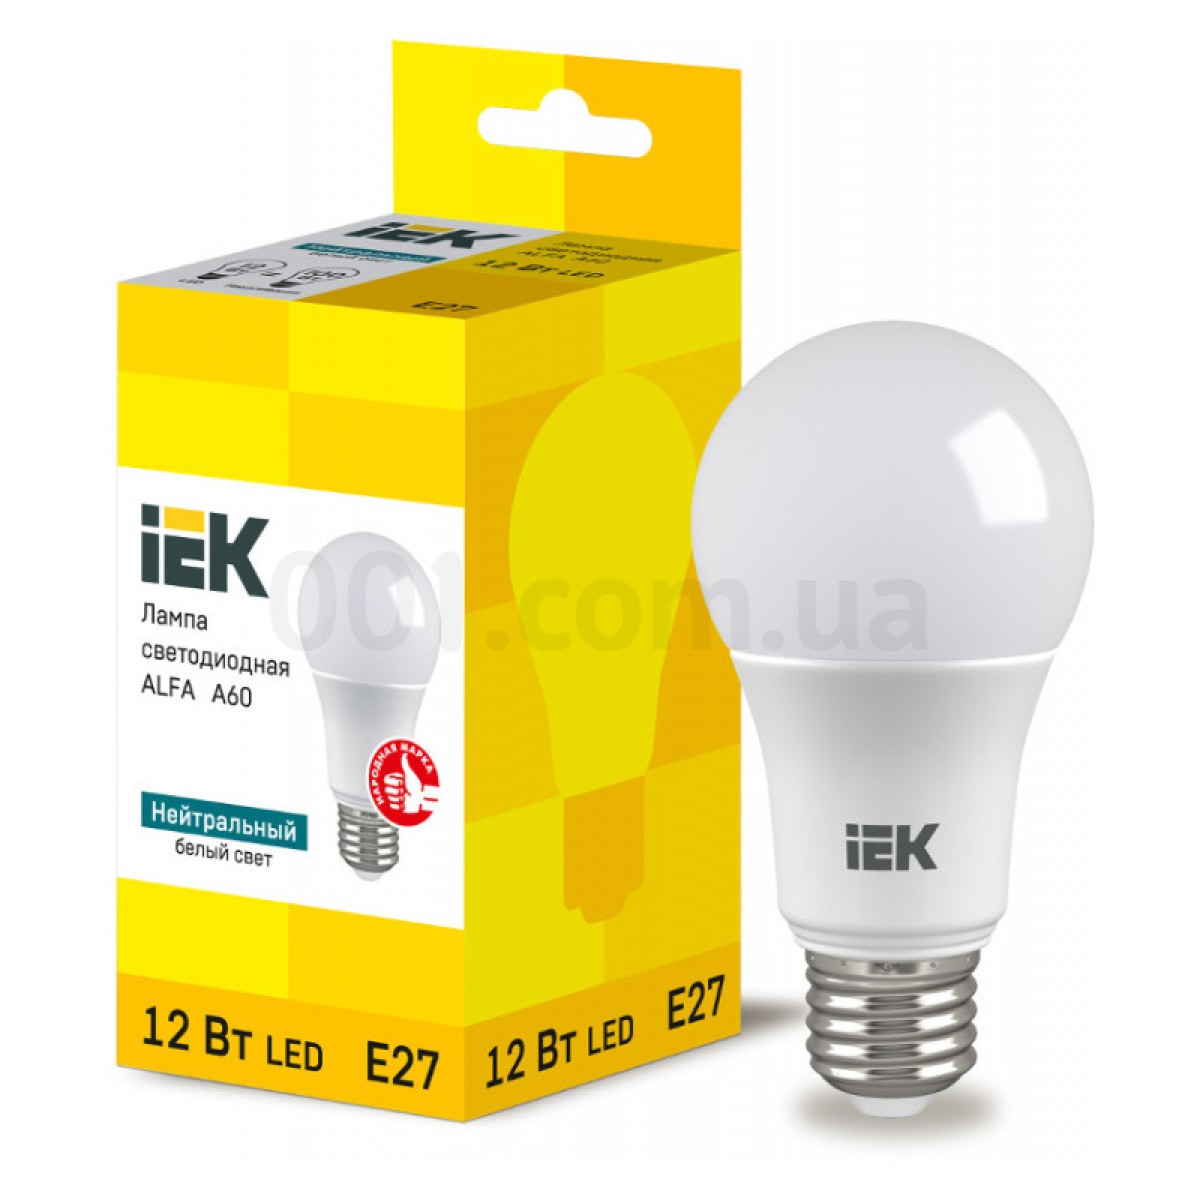 Світлодіодна лампа LED ALFA A60 (груша) 12 Вт 230В 4000К E27, IEK 256_256.jpg